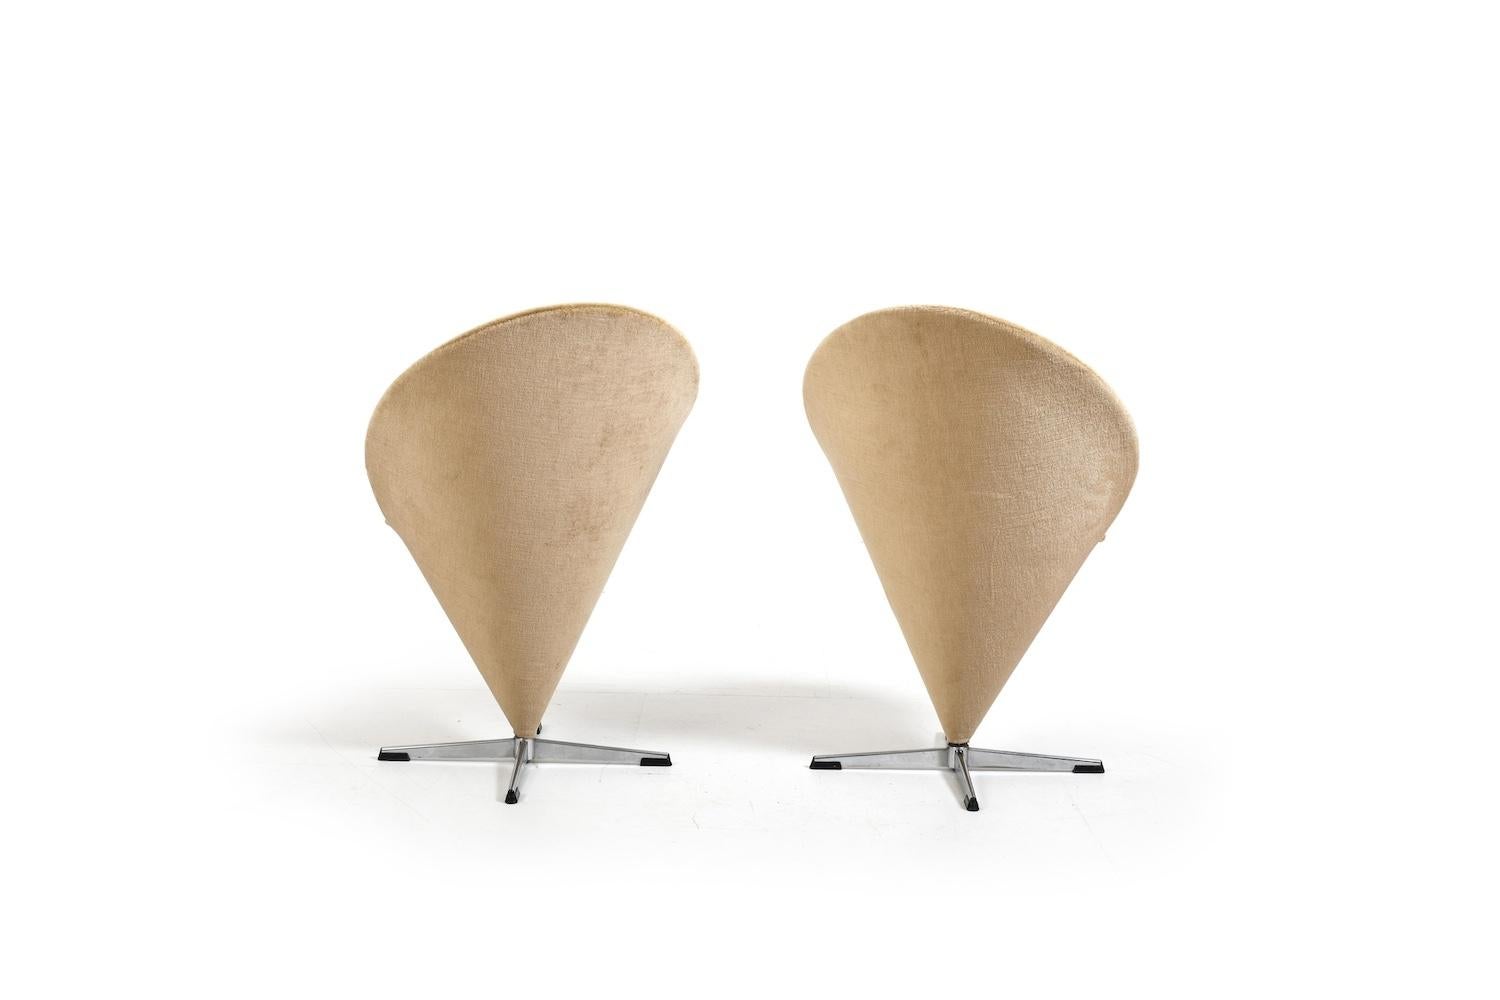 Pair of 1970s Verner Panton Cone Chairs by Plus Linje In Good Condition For Sale In Handewitt, DE